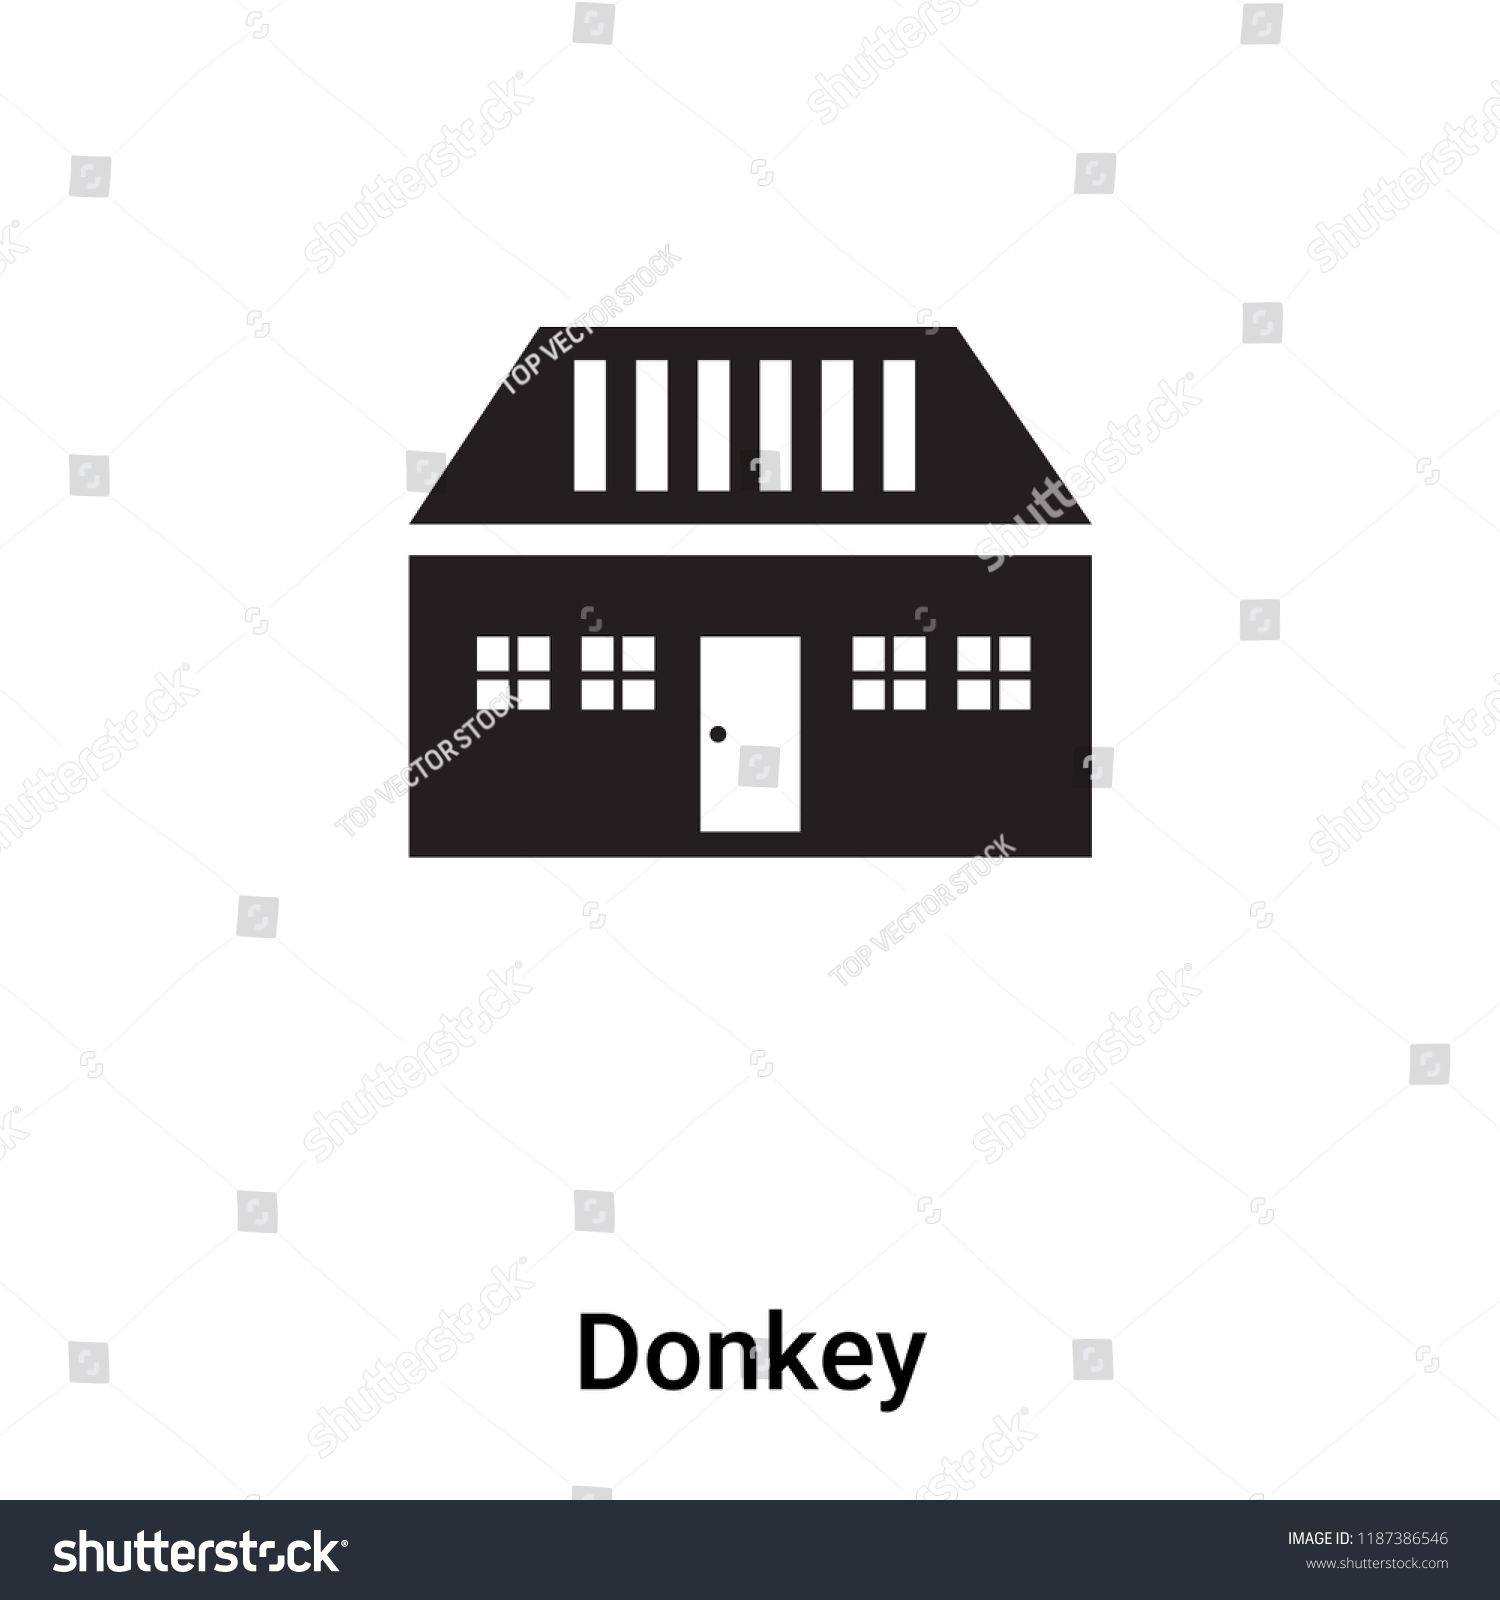 SVG of Donkey icon vector isolated on white background, logo concept of Donkey sign on transparent background, filled black symbol svg